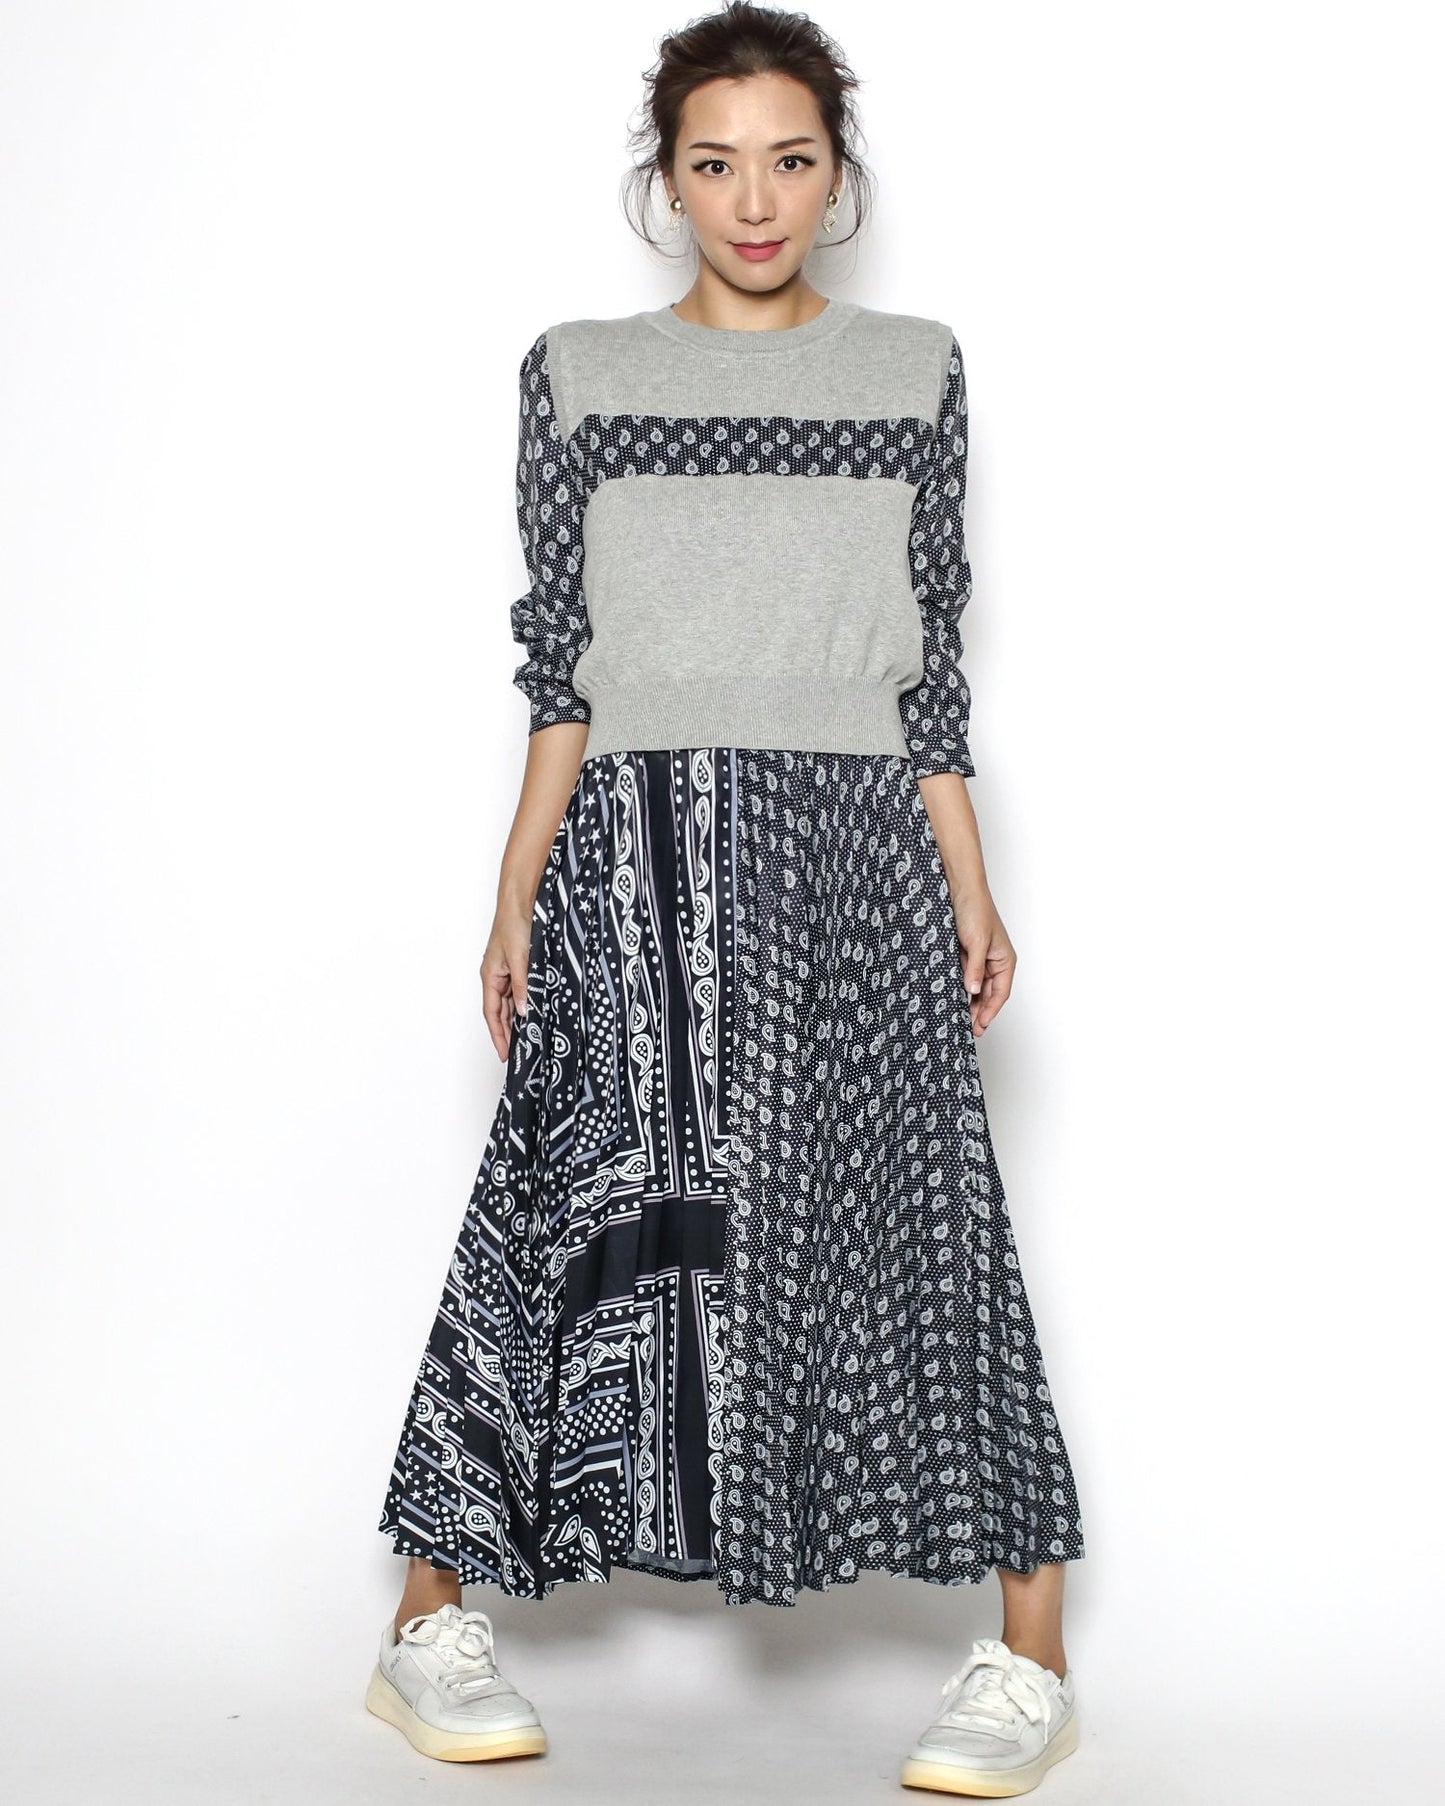 grey knitted top & navy pattern chiffon set dress *pre-order*